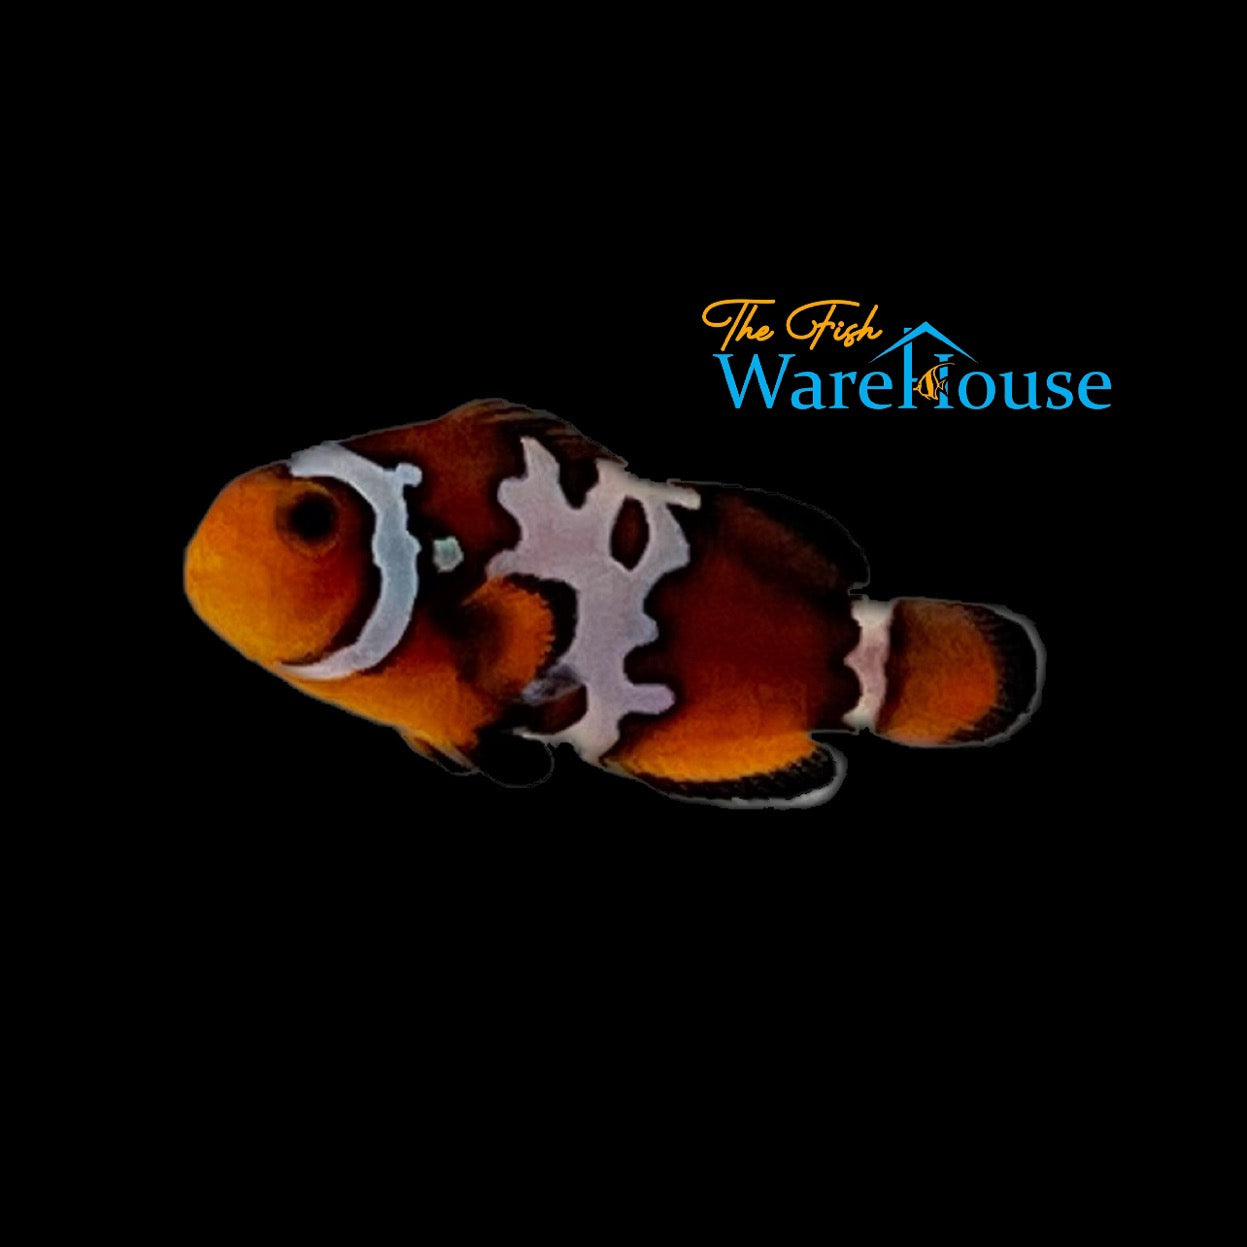 Blacker Ice Clownfish (Amphiprion ocellaris)